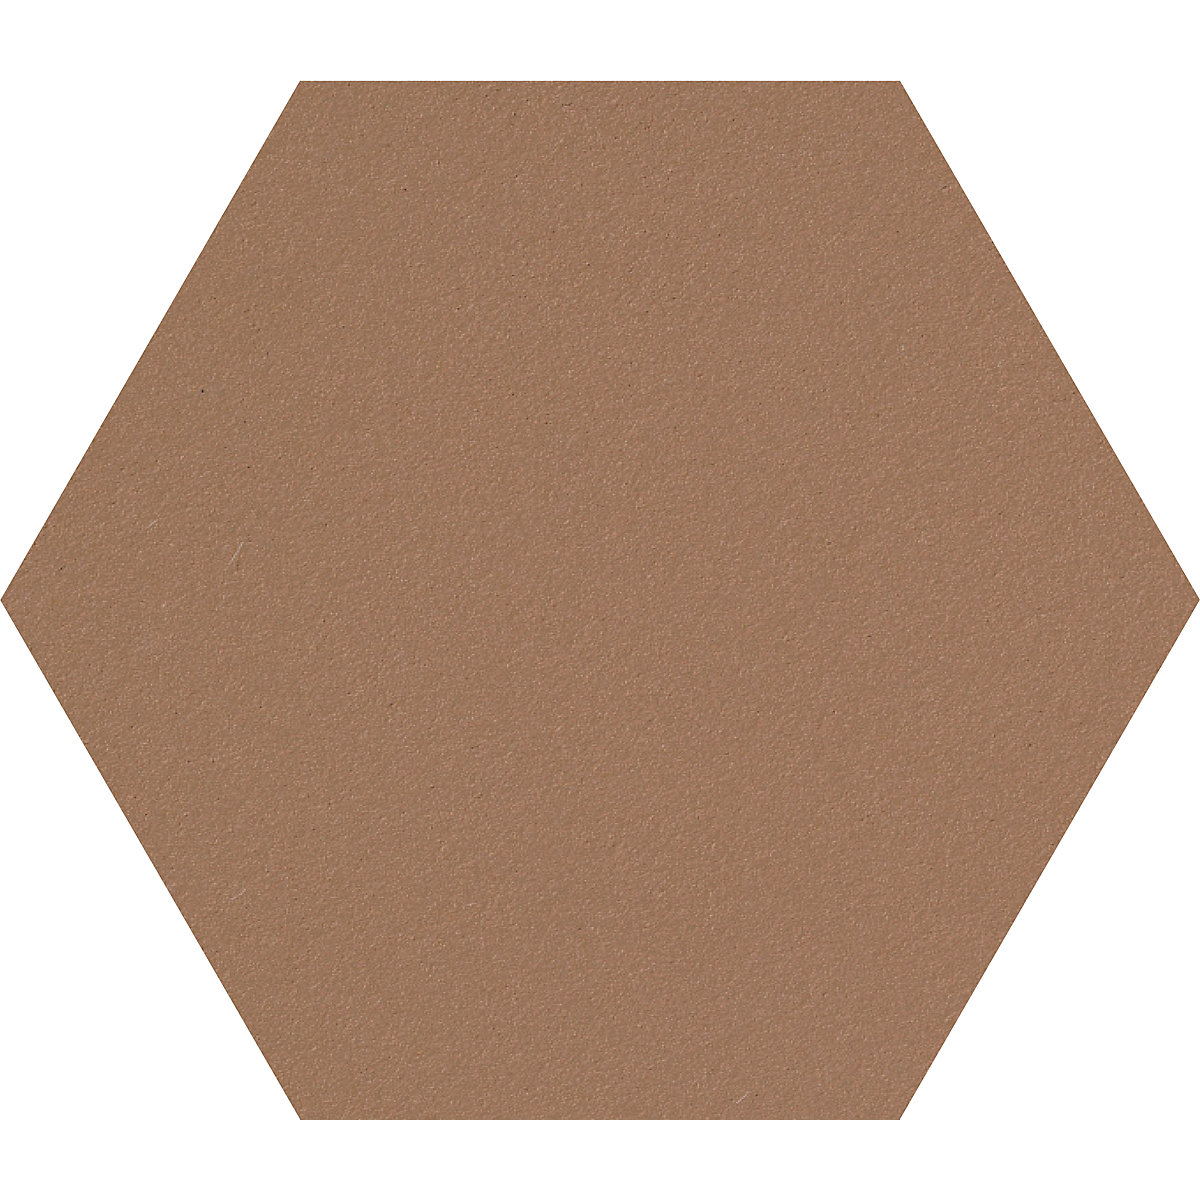 Design prikbord zeshoekig – Chameleon, kurk, b x h = 600 x 600 mm, lichtbruin-28